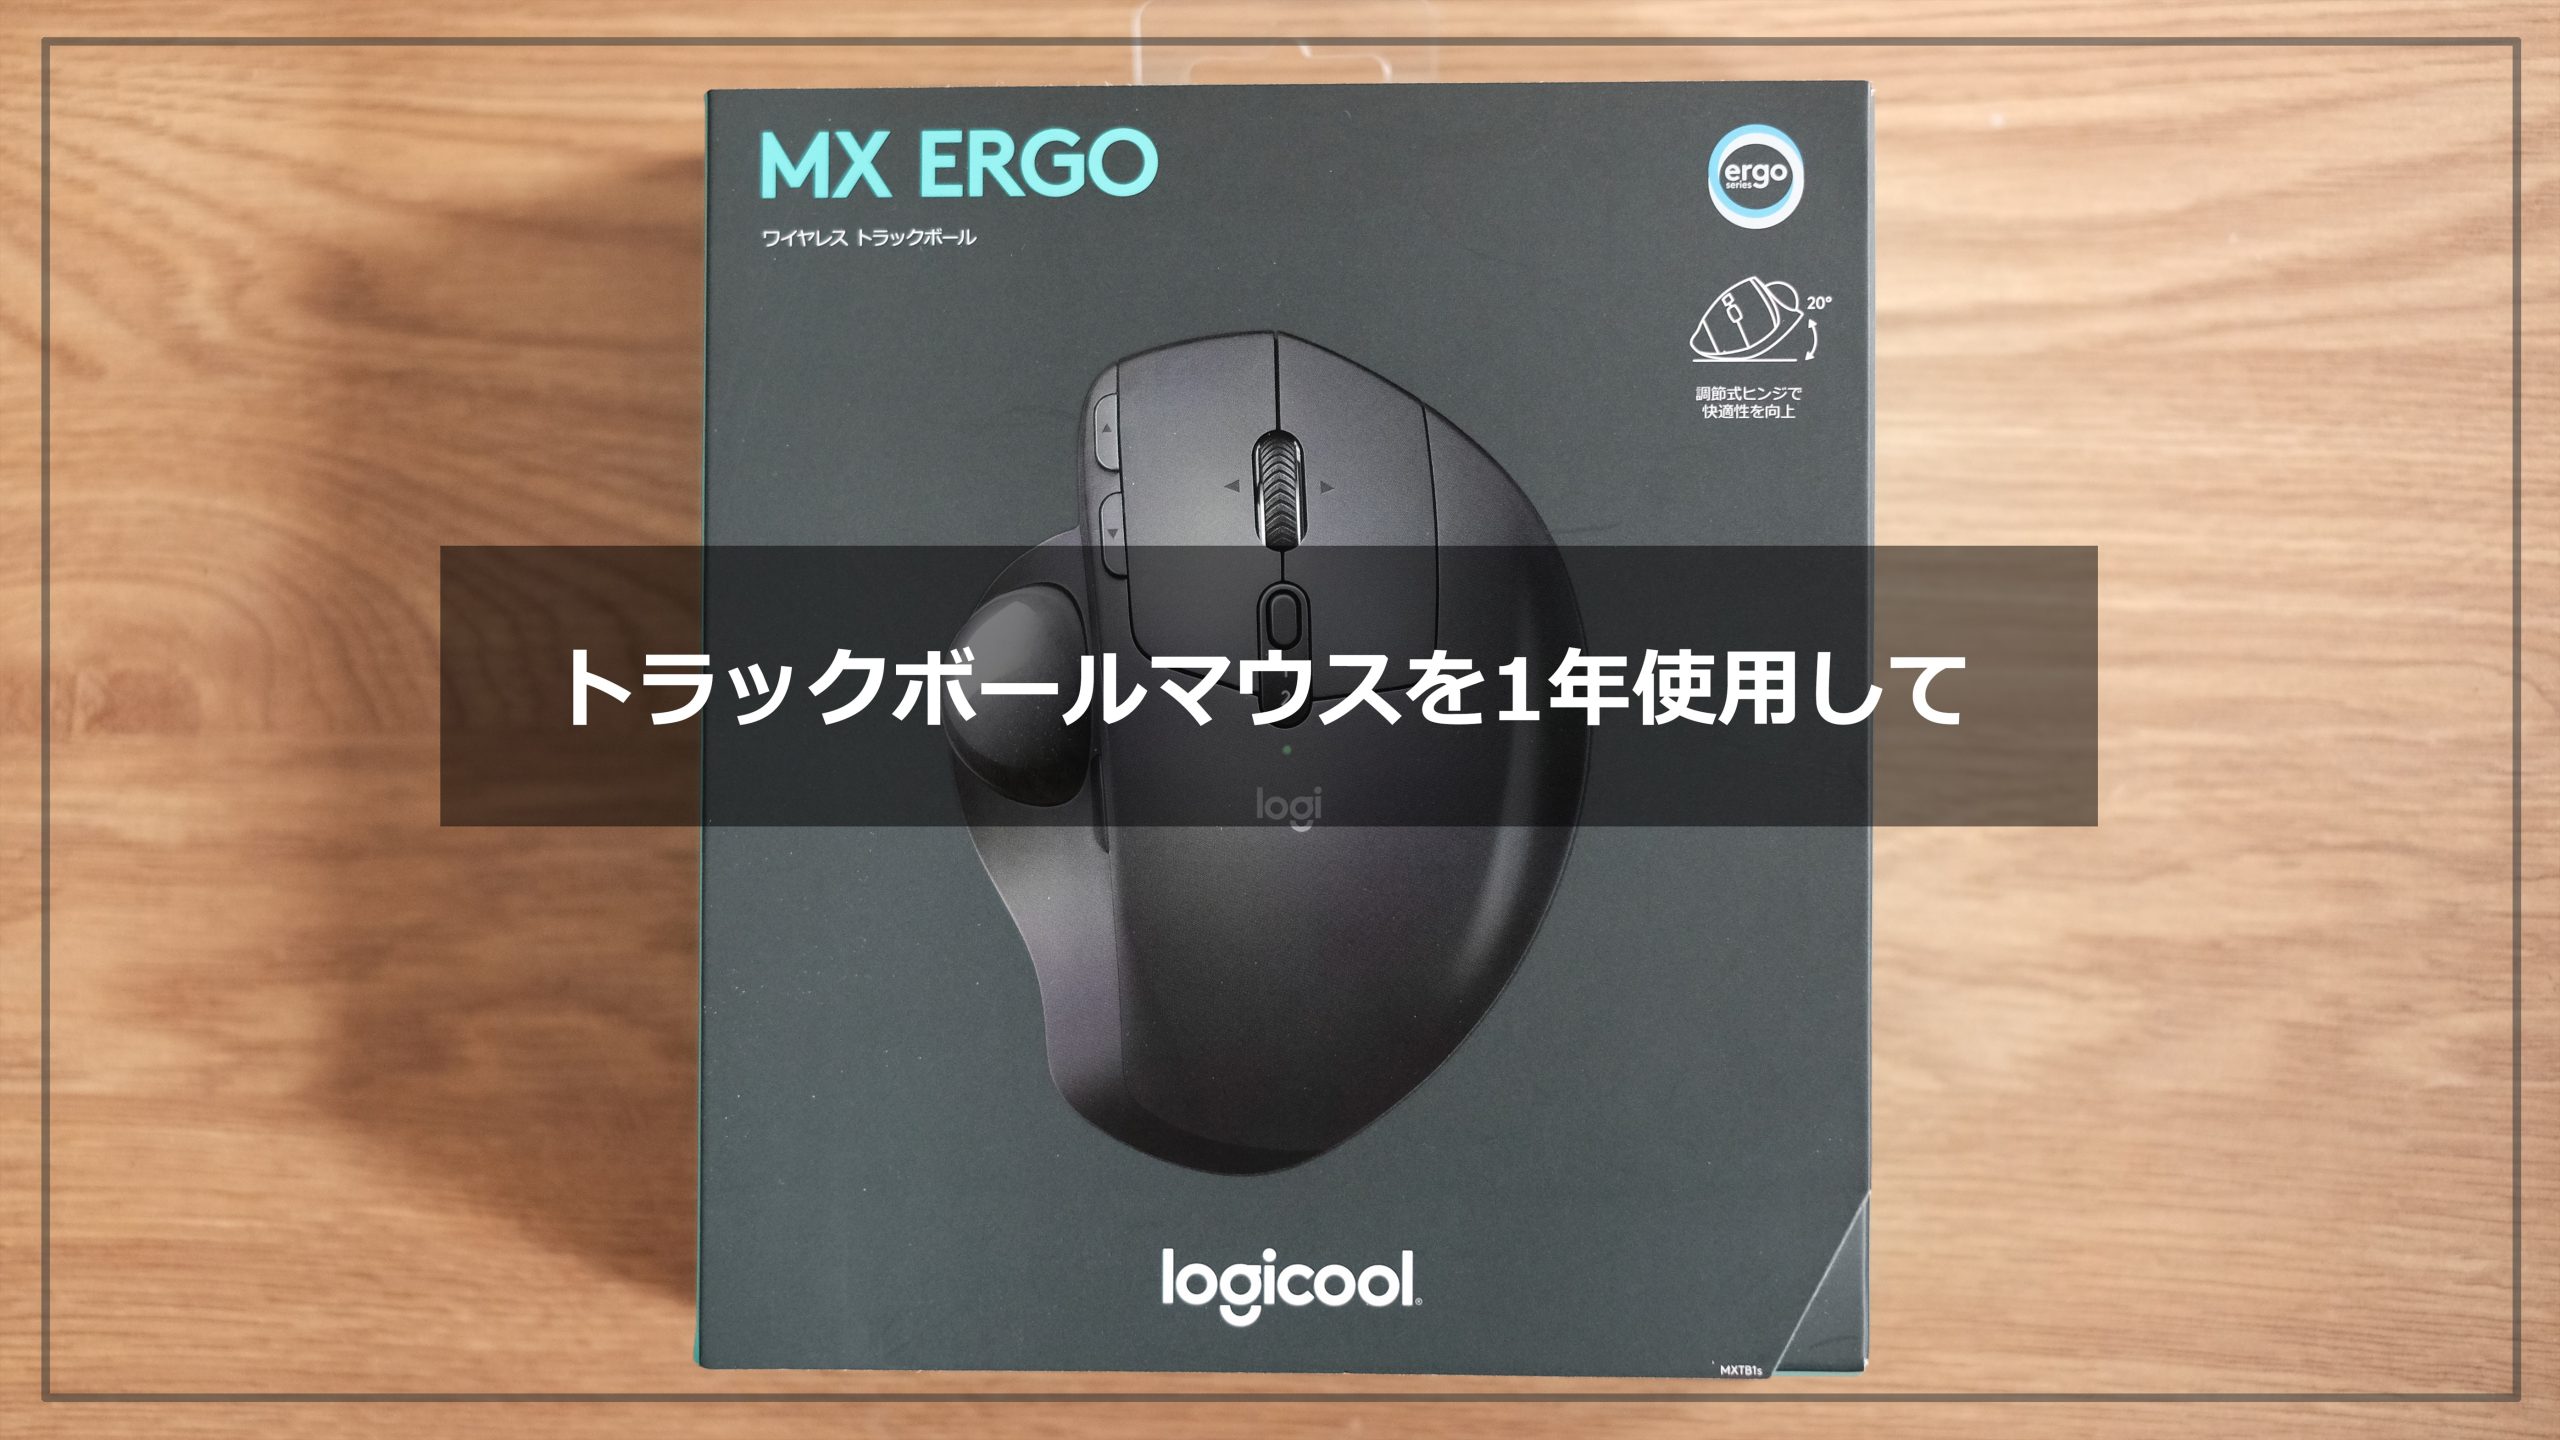 【Logicool】MX ERGO トラックボールマウス – 時間短縮に繋がる